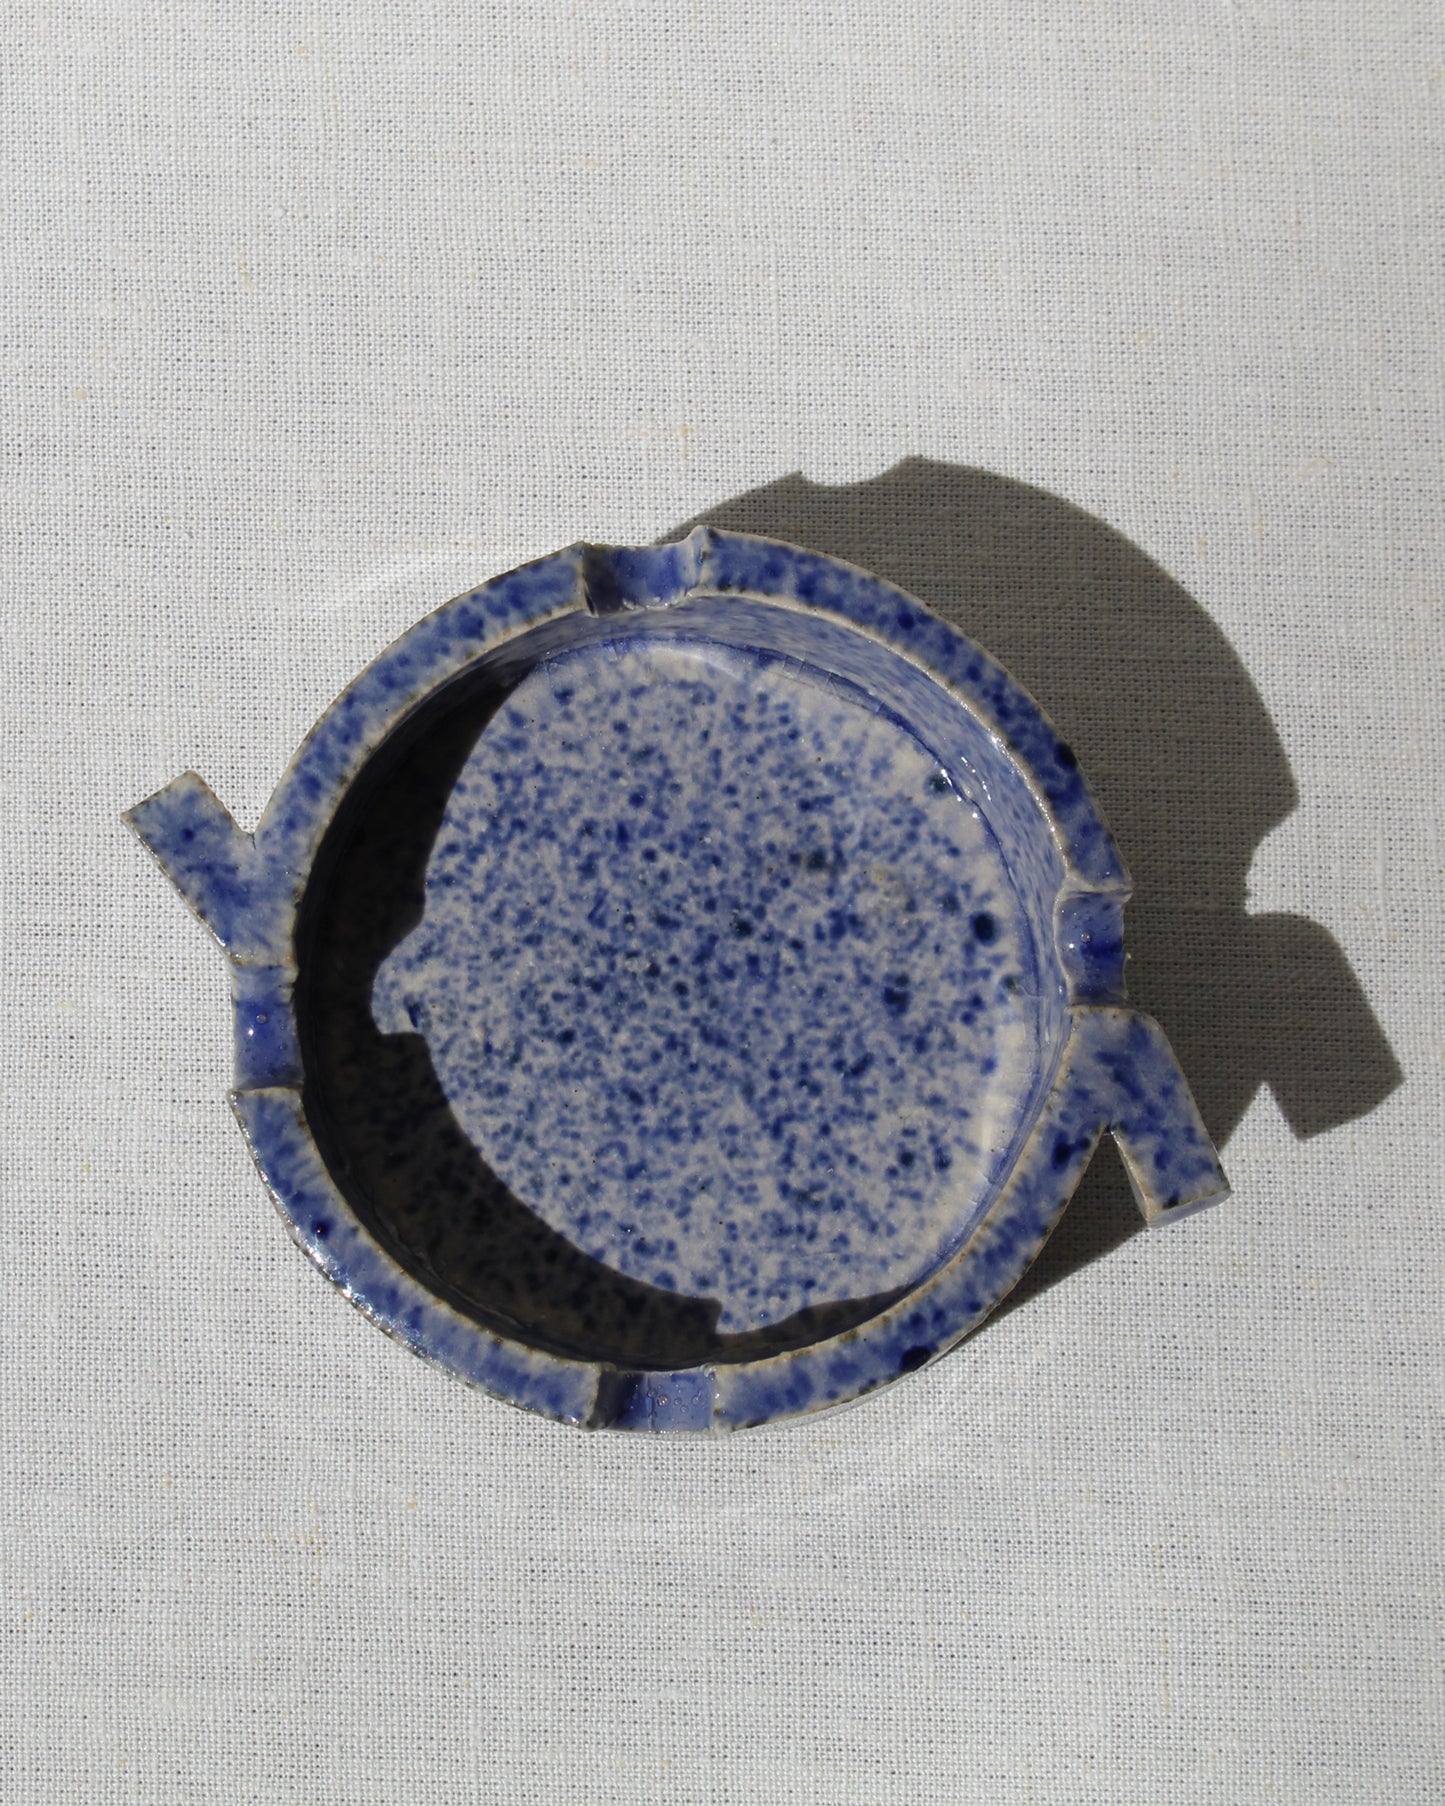 Stephen Michaels Studded Ashtray in Blue Glaze